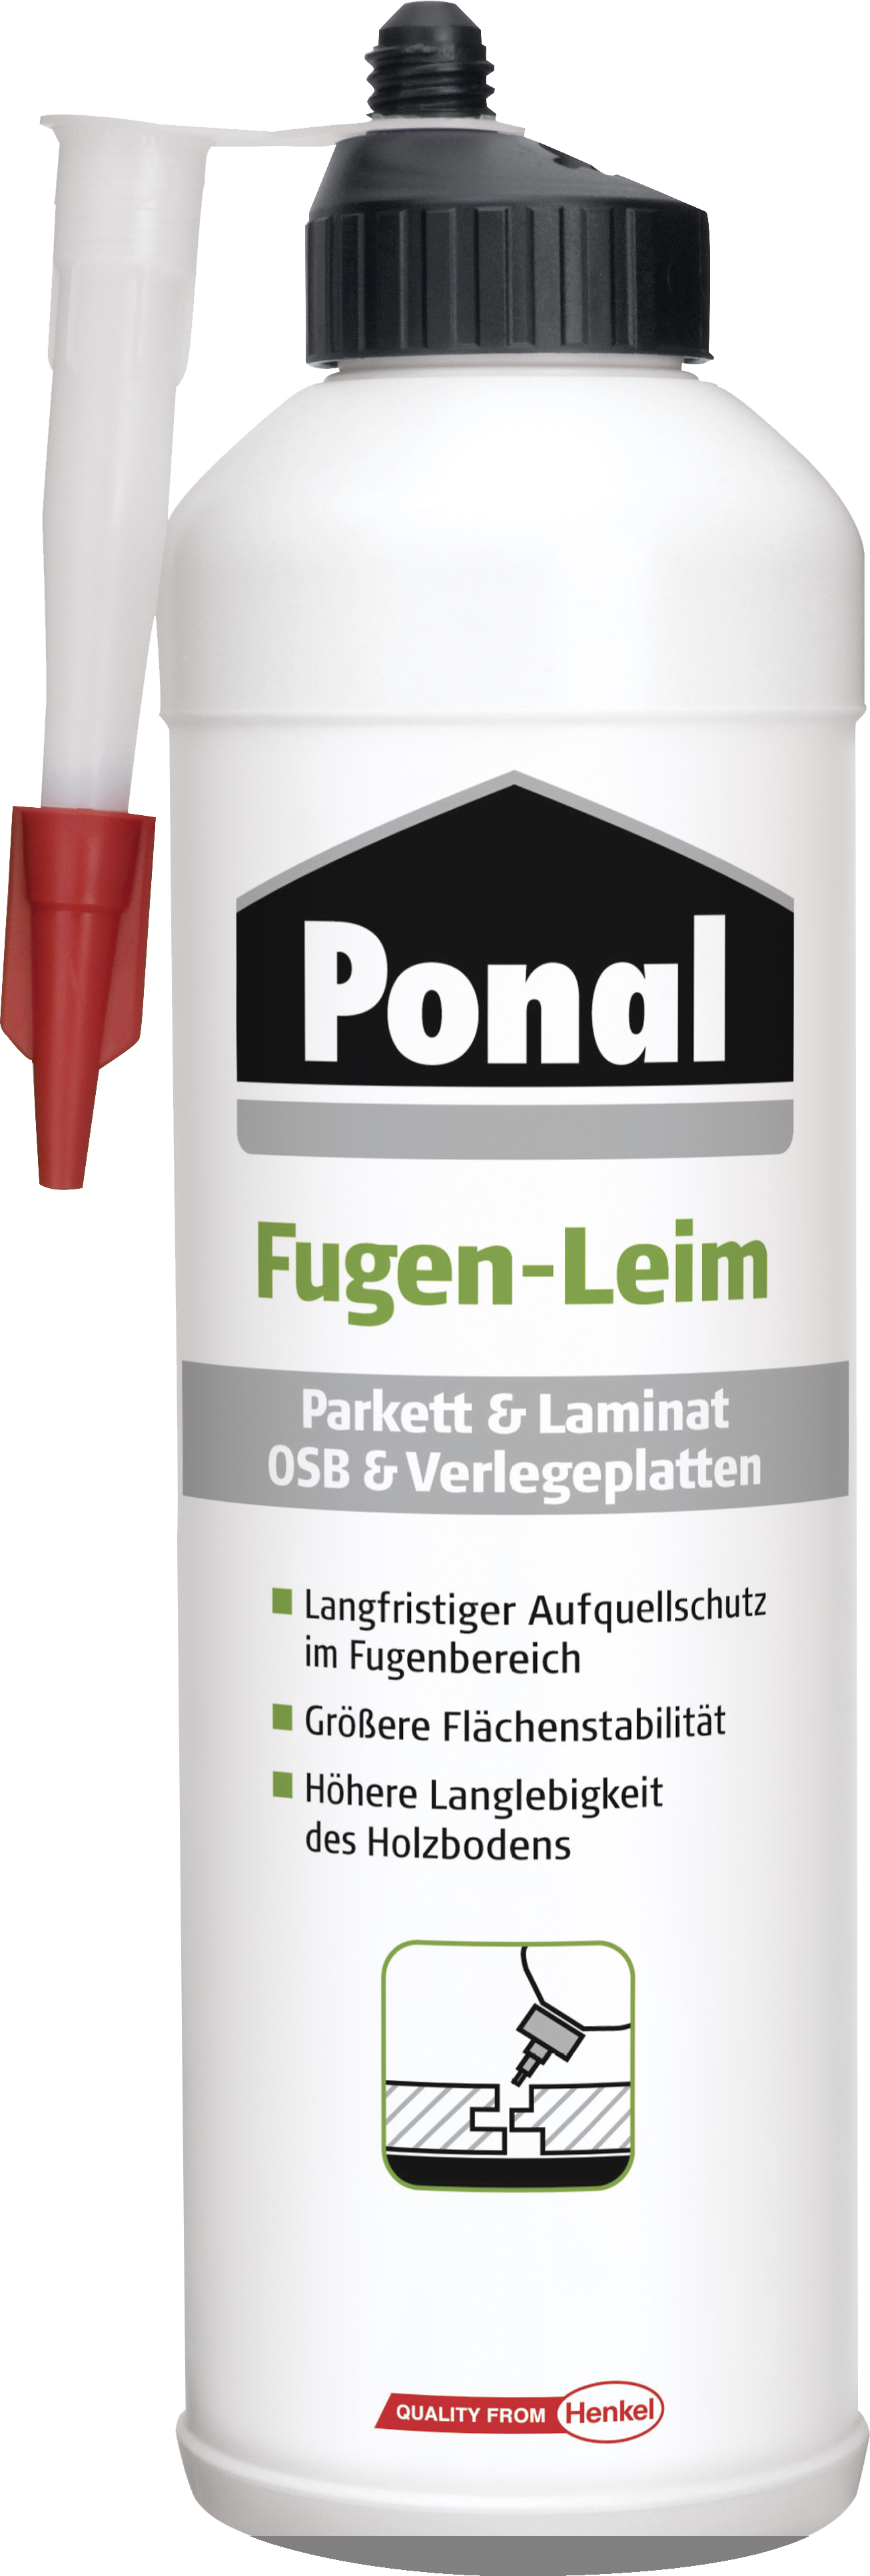 HENKEL - Ponal Parkett & Laminat Fugenleim 1kg 